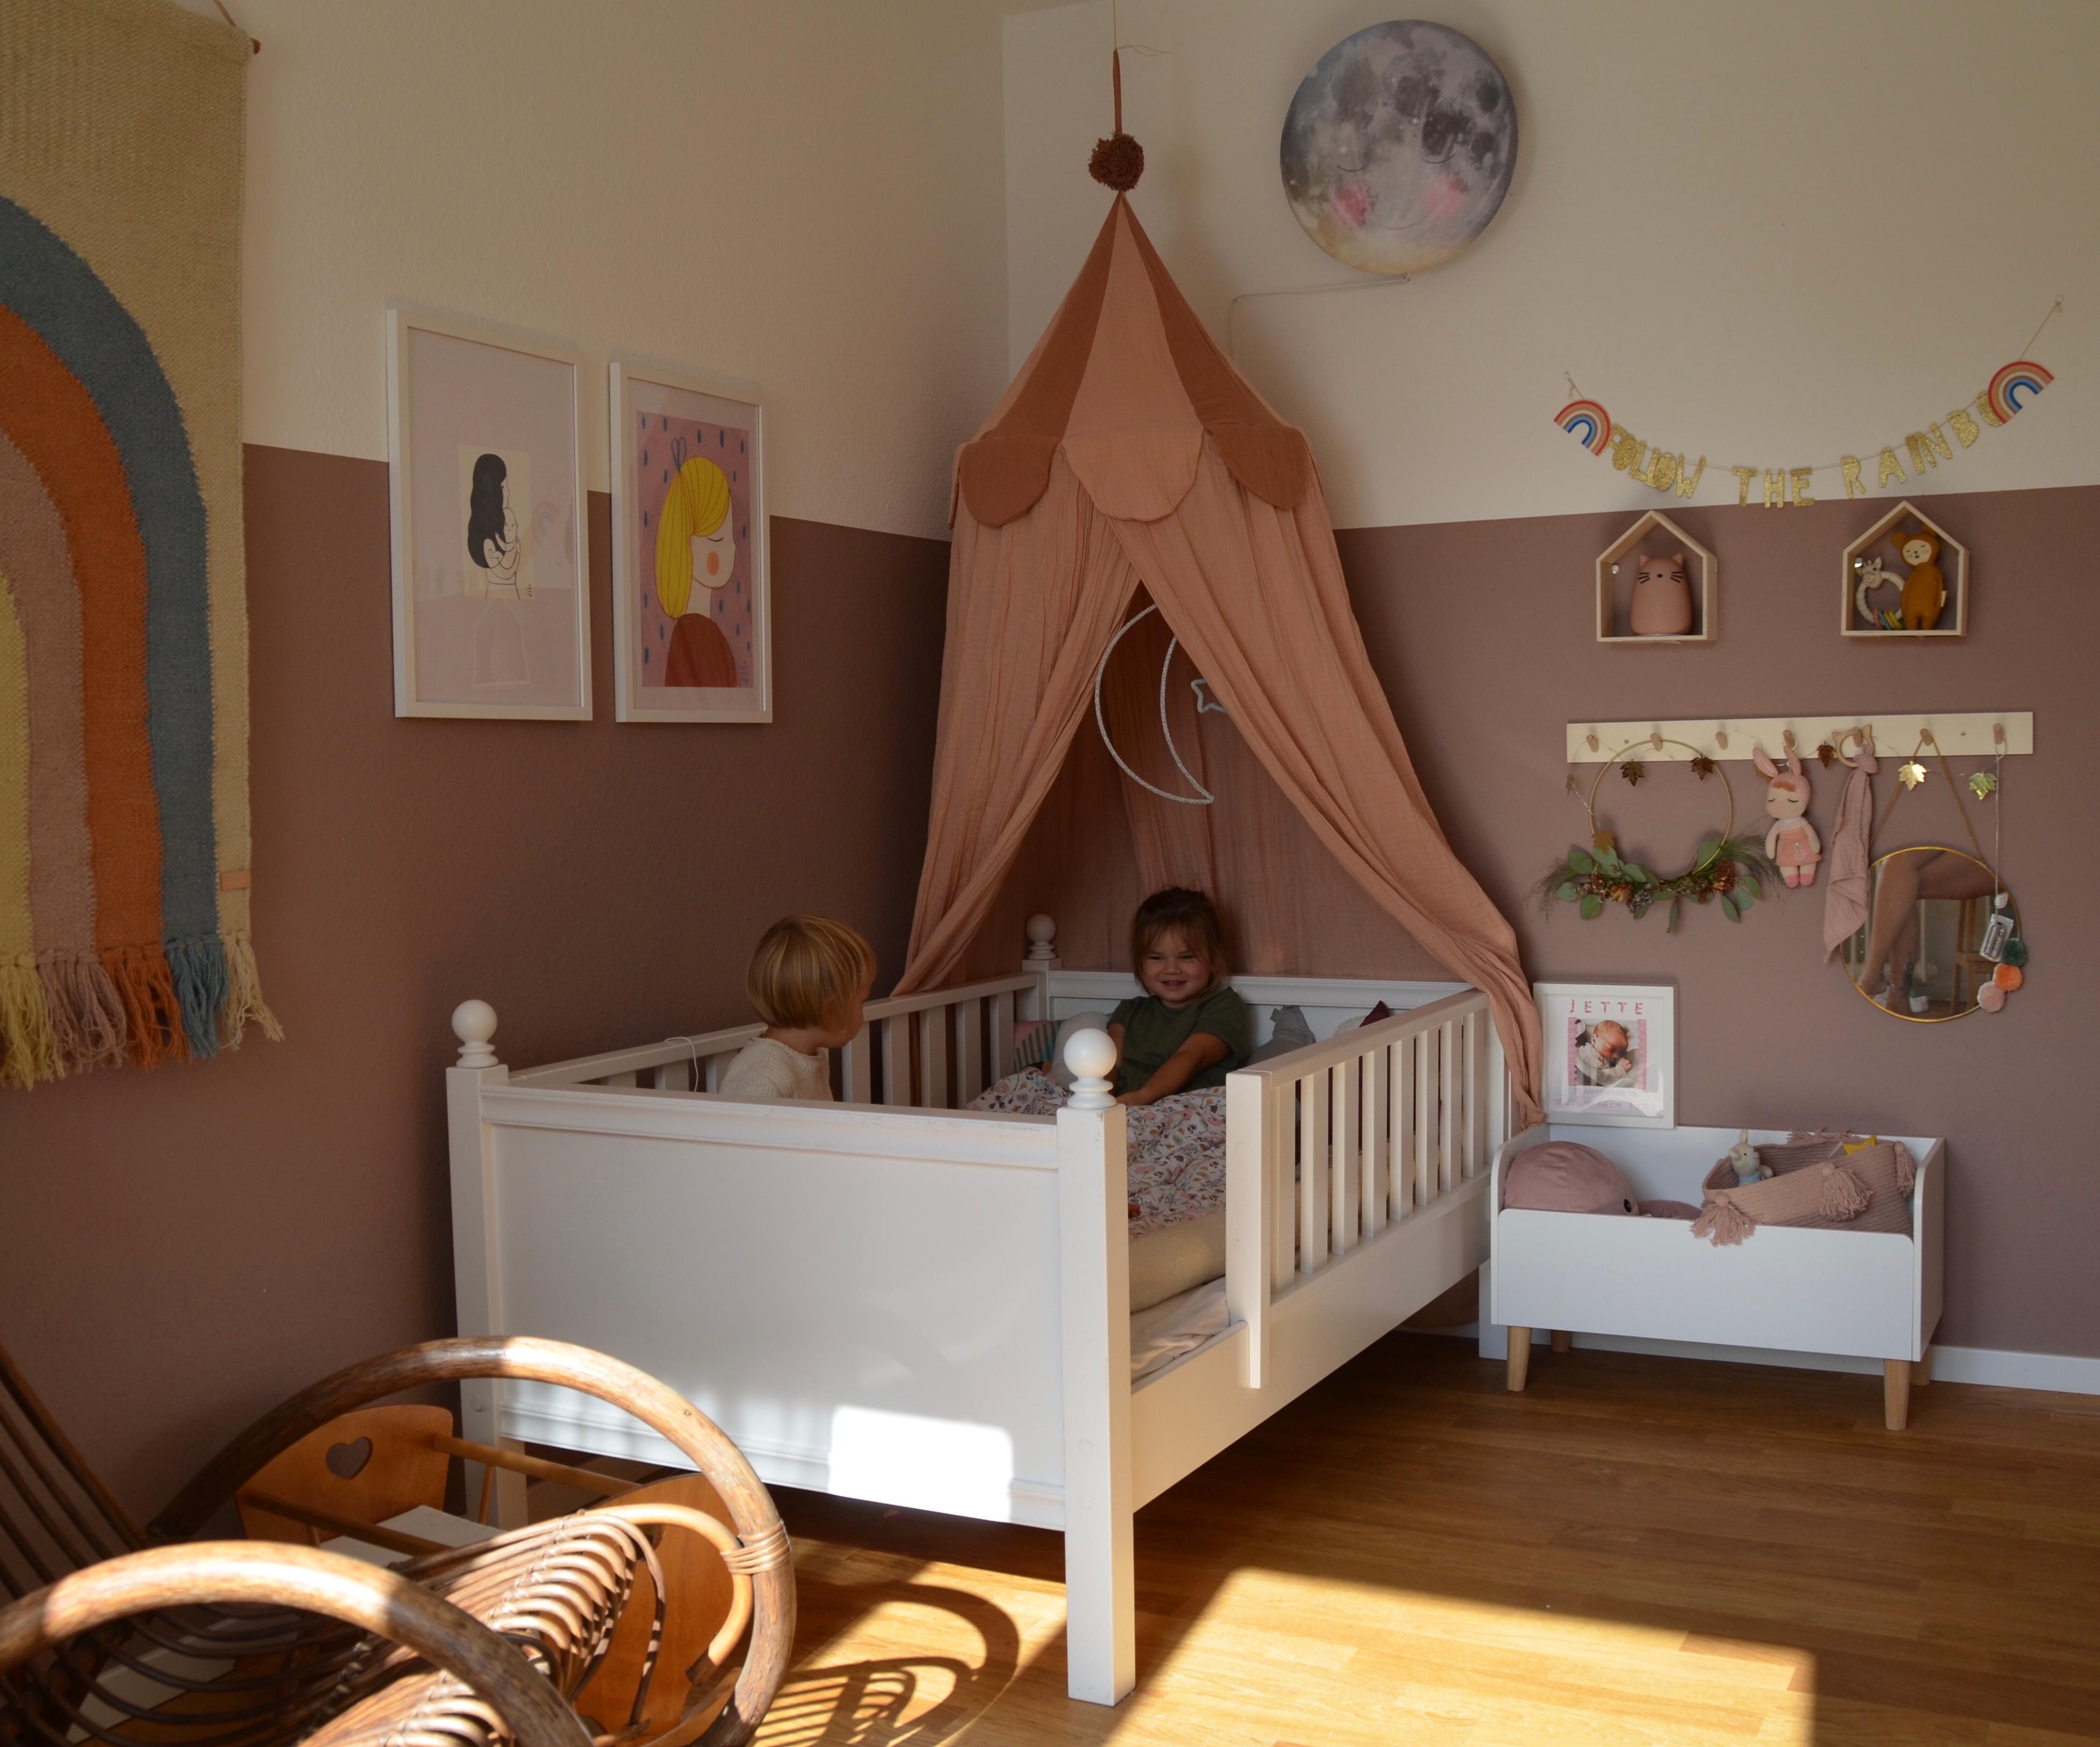 Favorite cozy place #bedroom #kidsroom #kidsroominspiration 